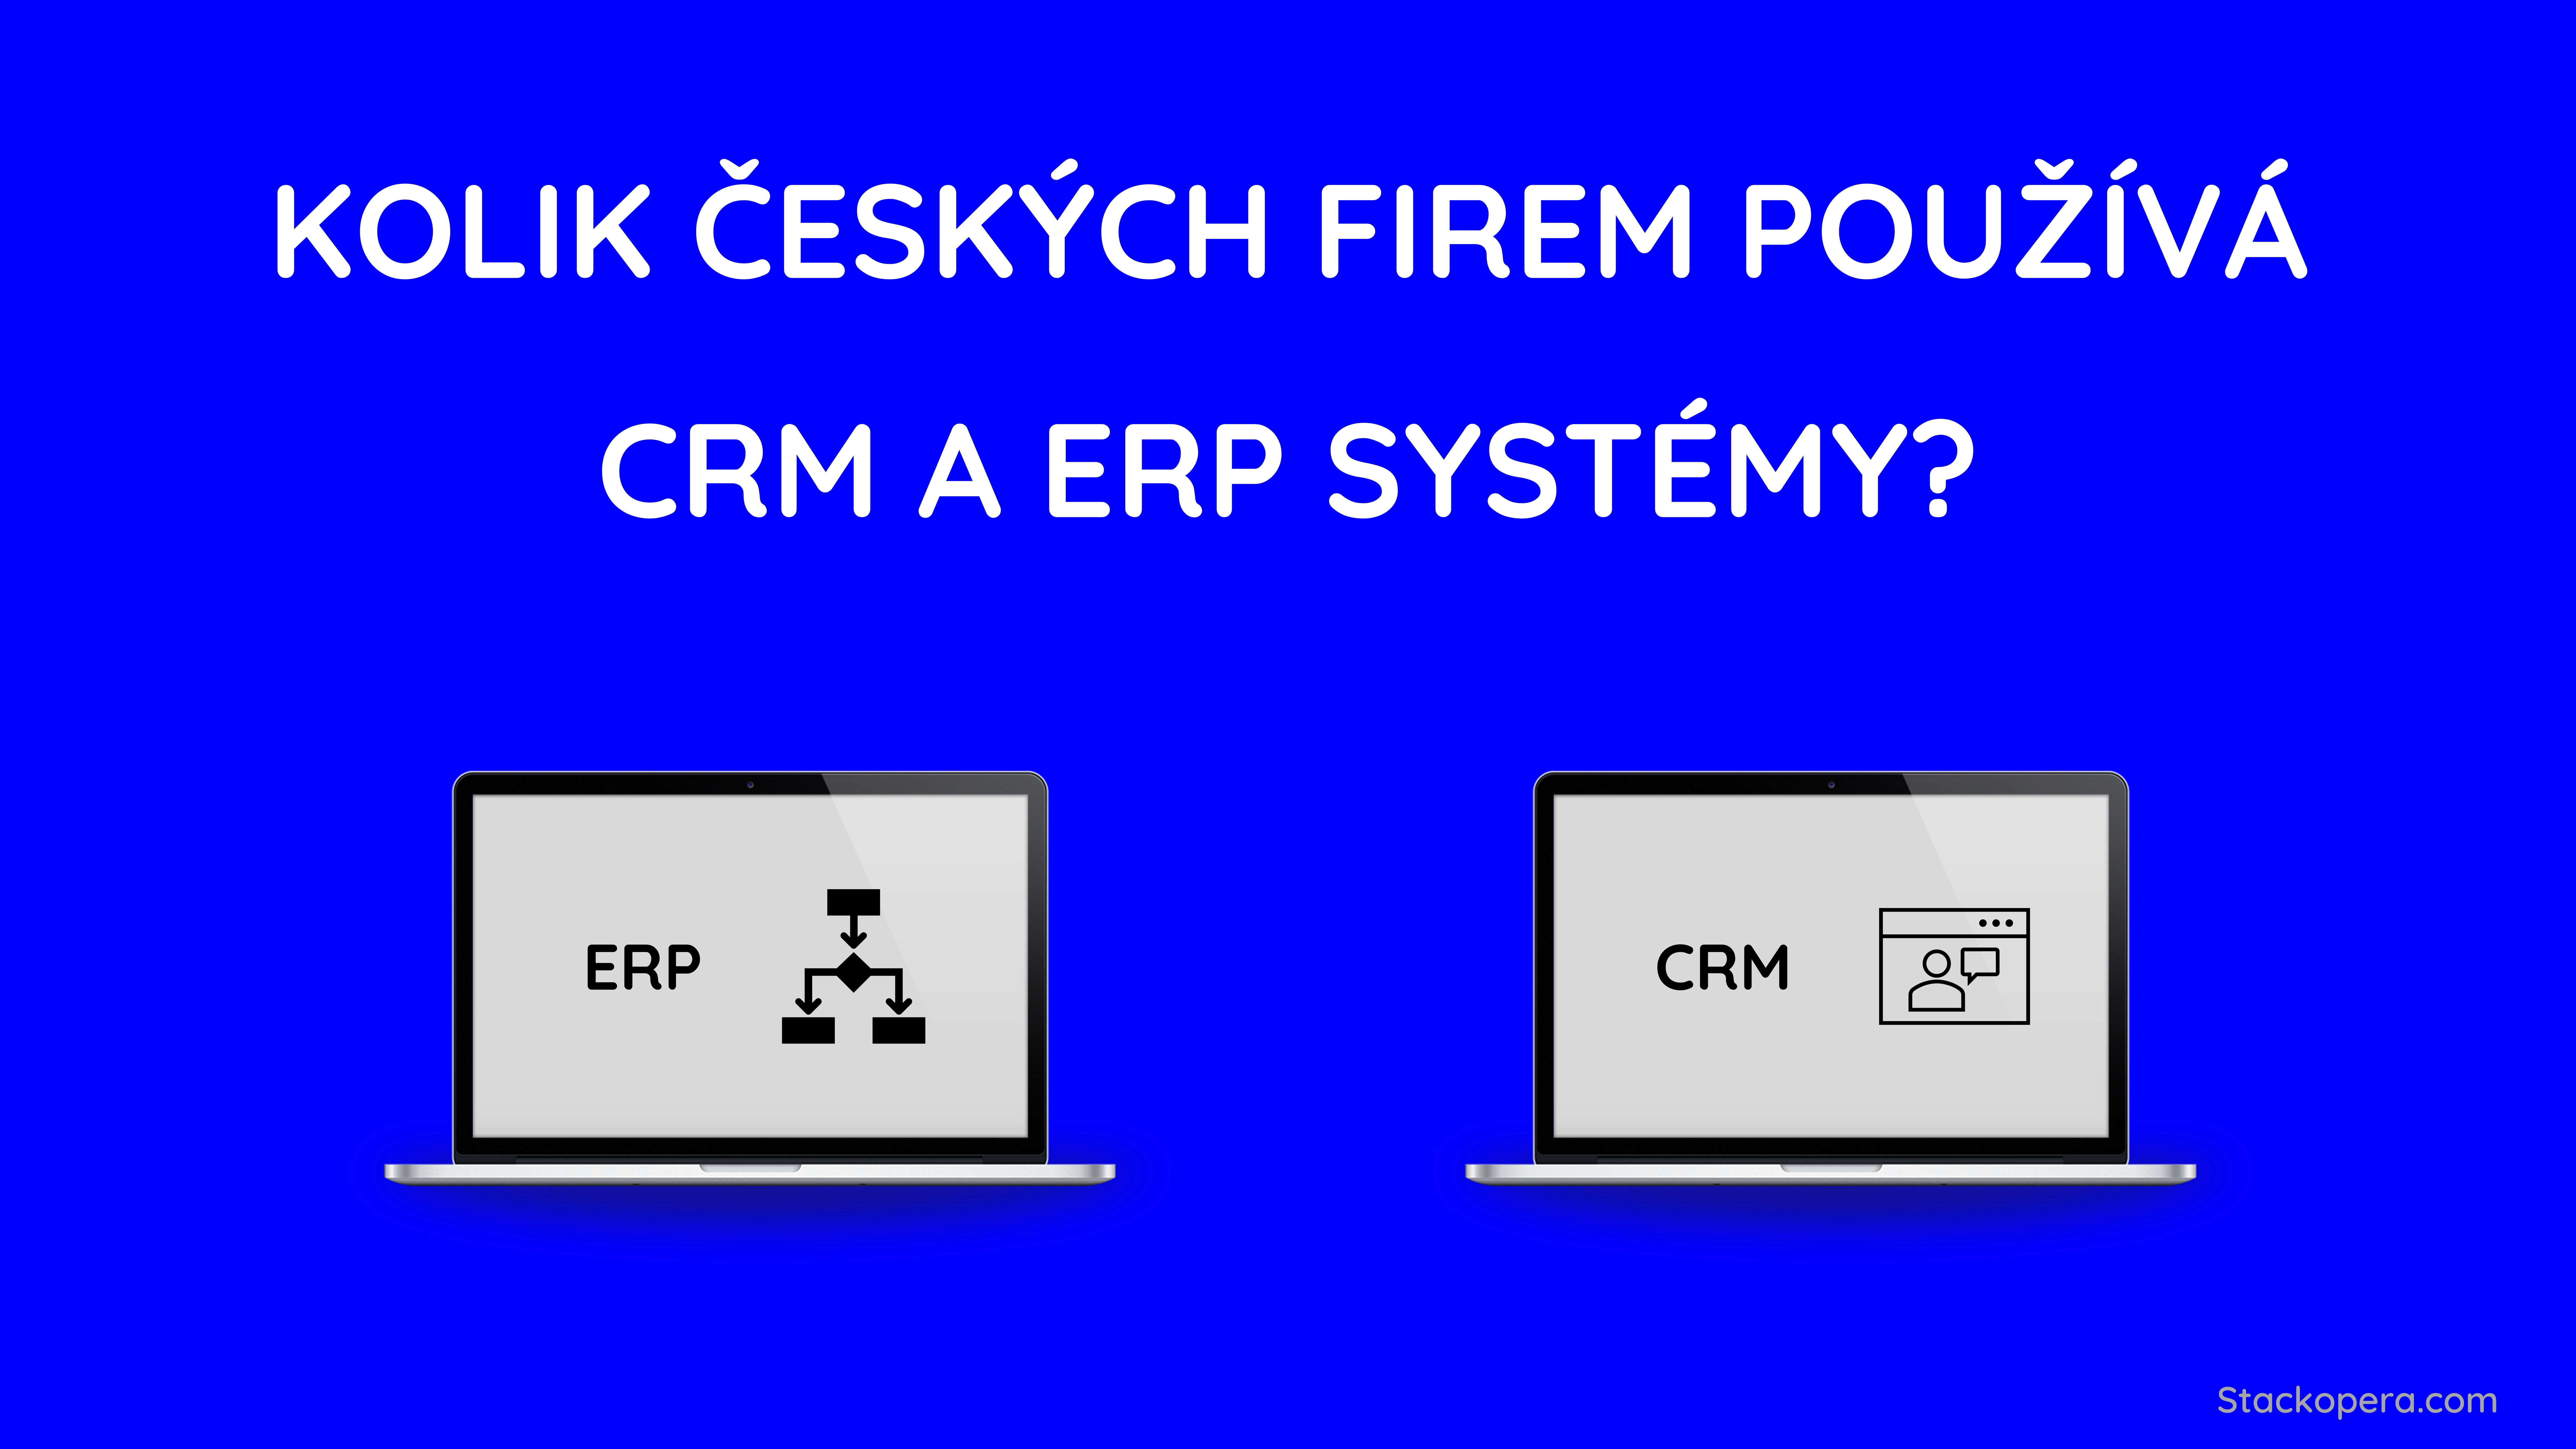 ERP systemy CRM systemy ceske firmy header